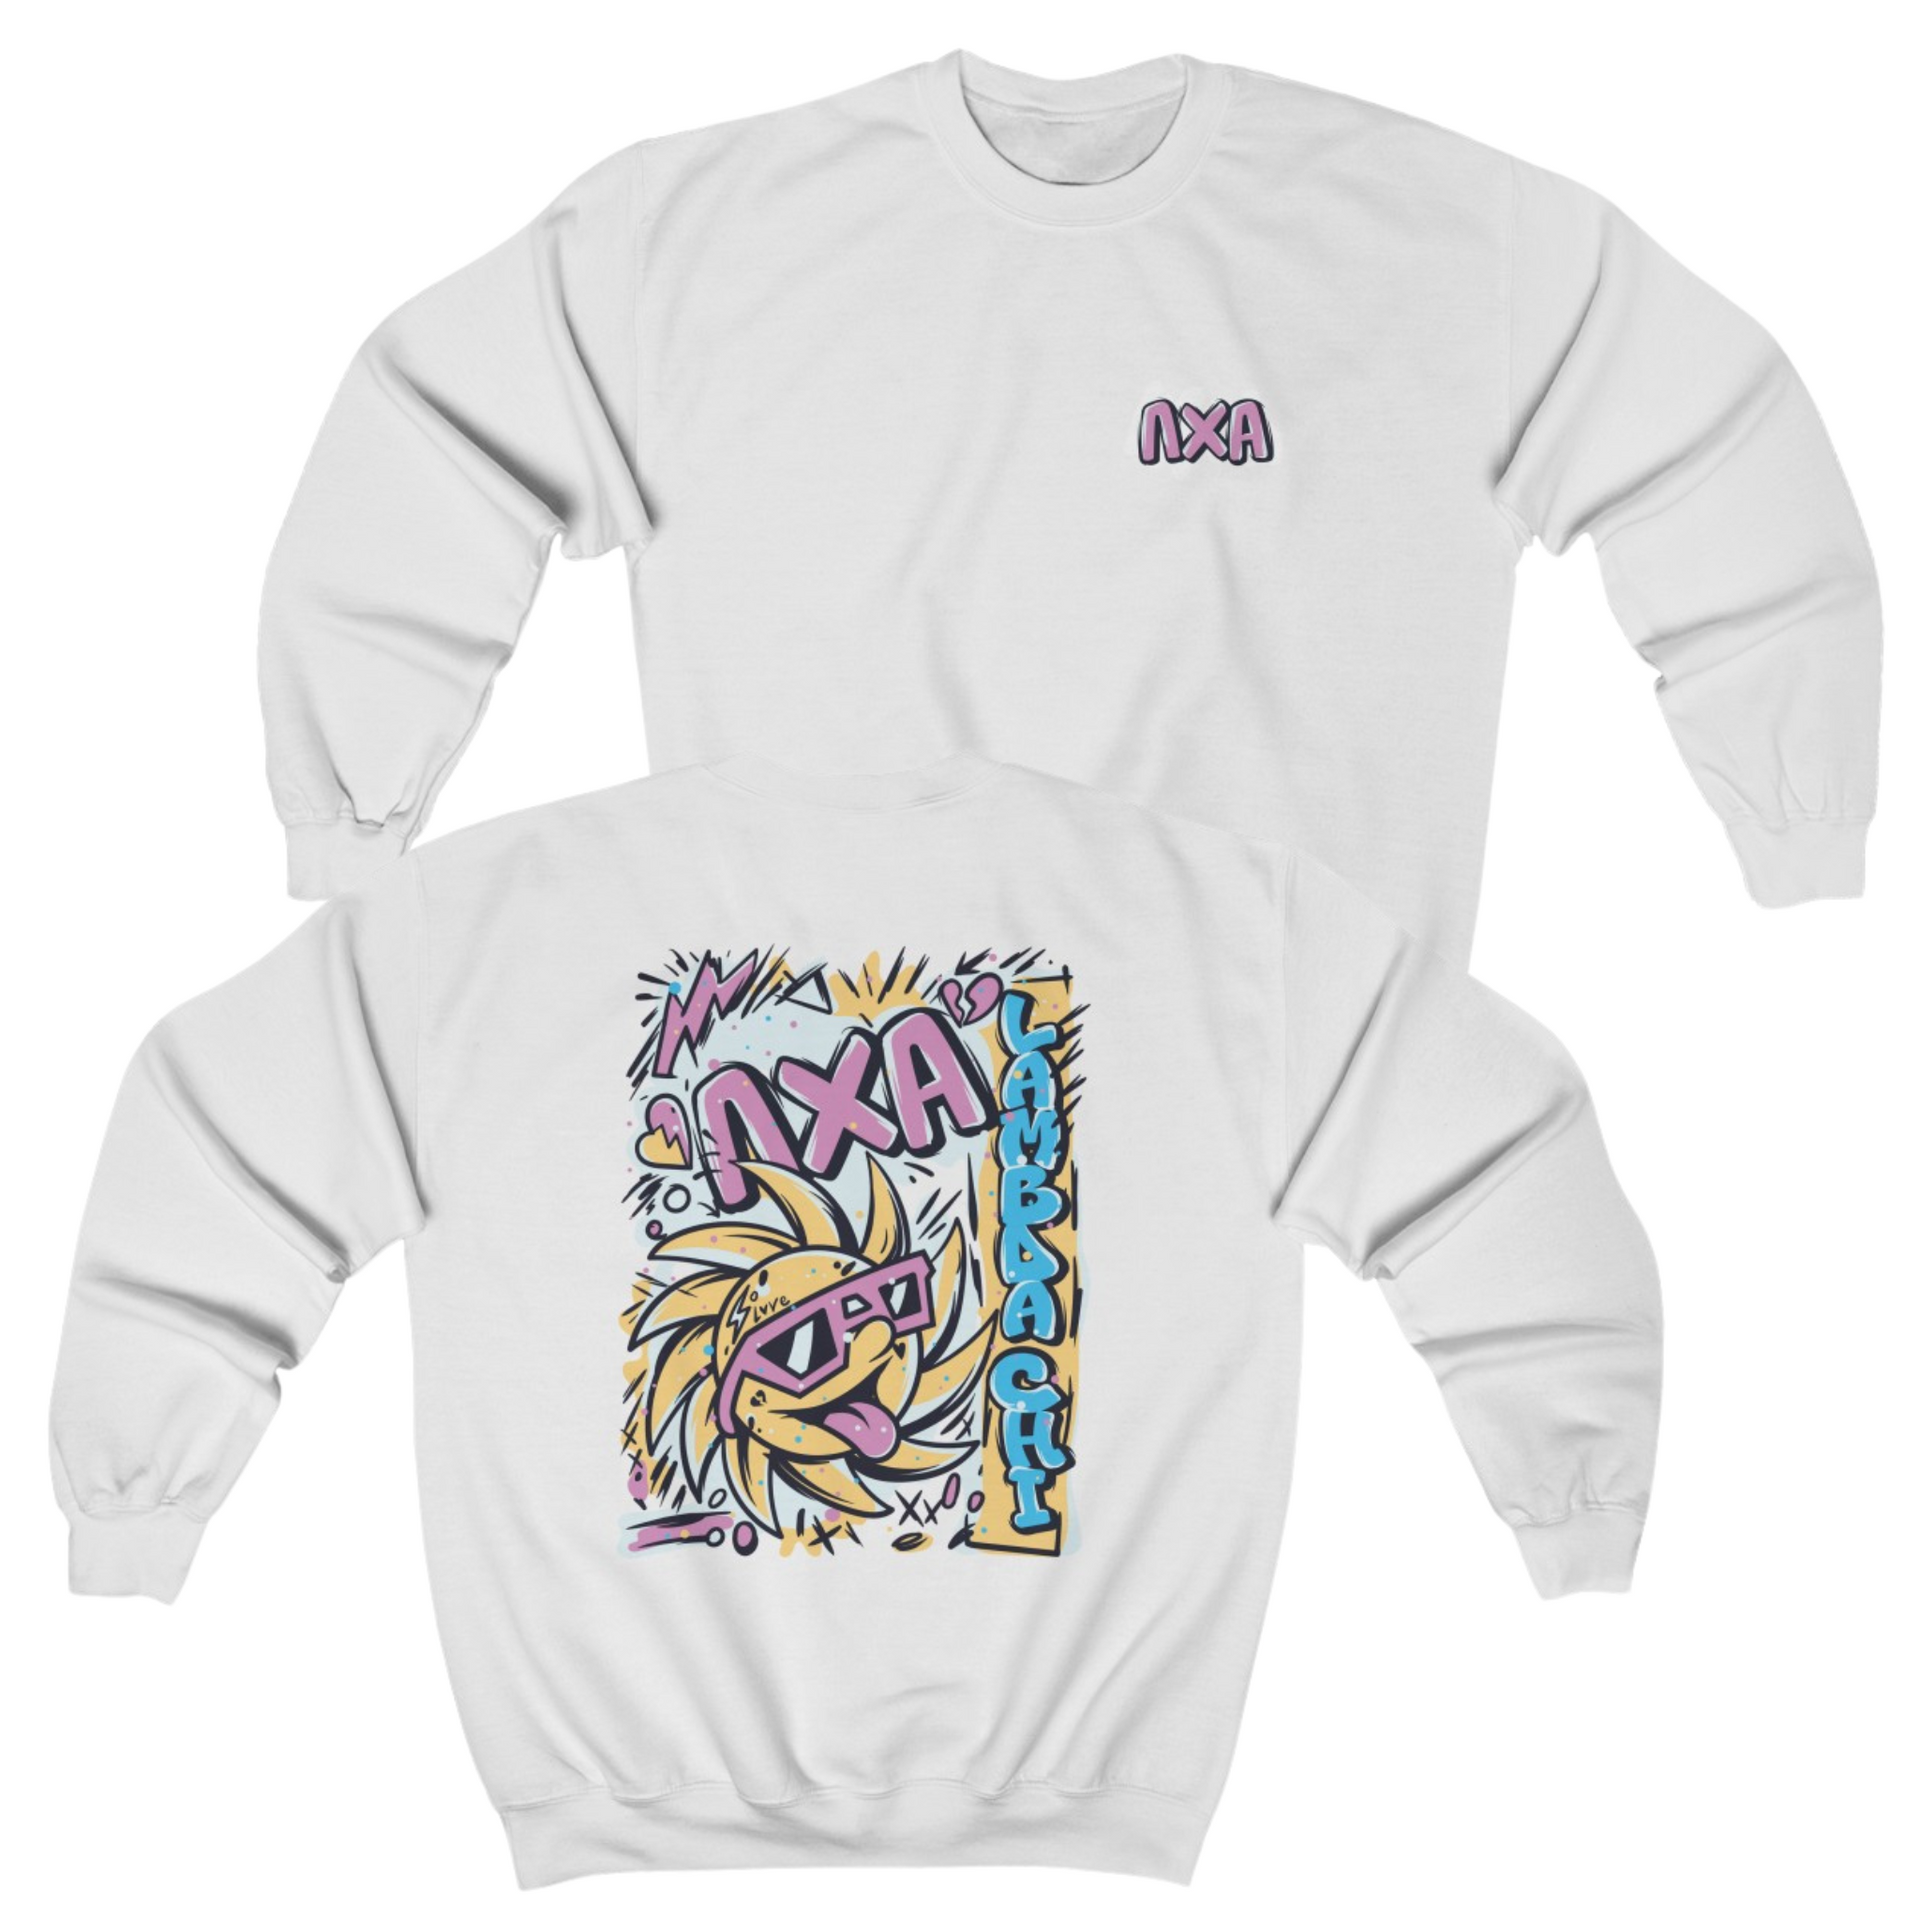 White Lambda Chi Alpha Graphic Crewneck Sweatshirt | Fun in the Sun | Lambda Chi Alpha Fraternity Apparel 